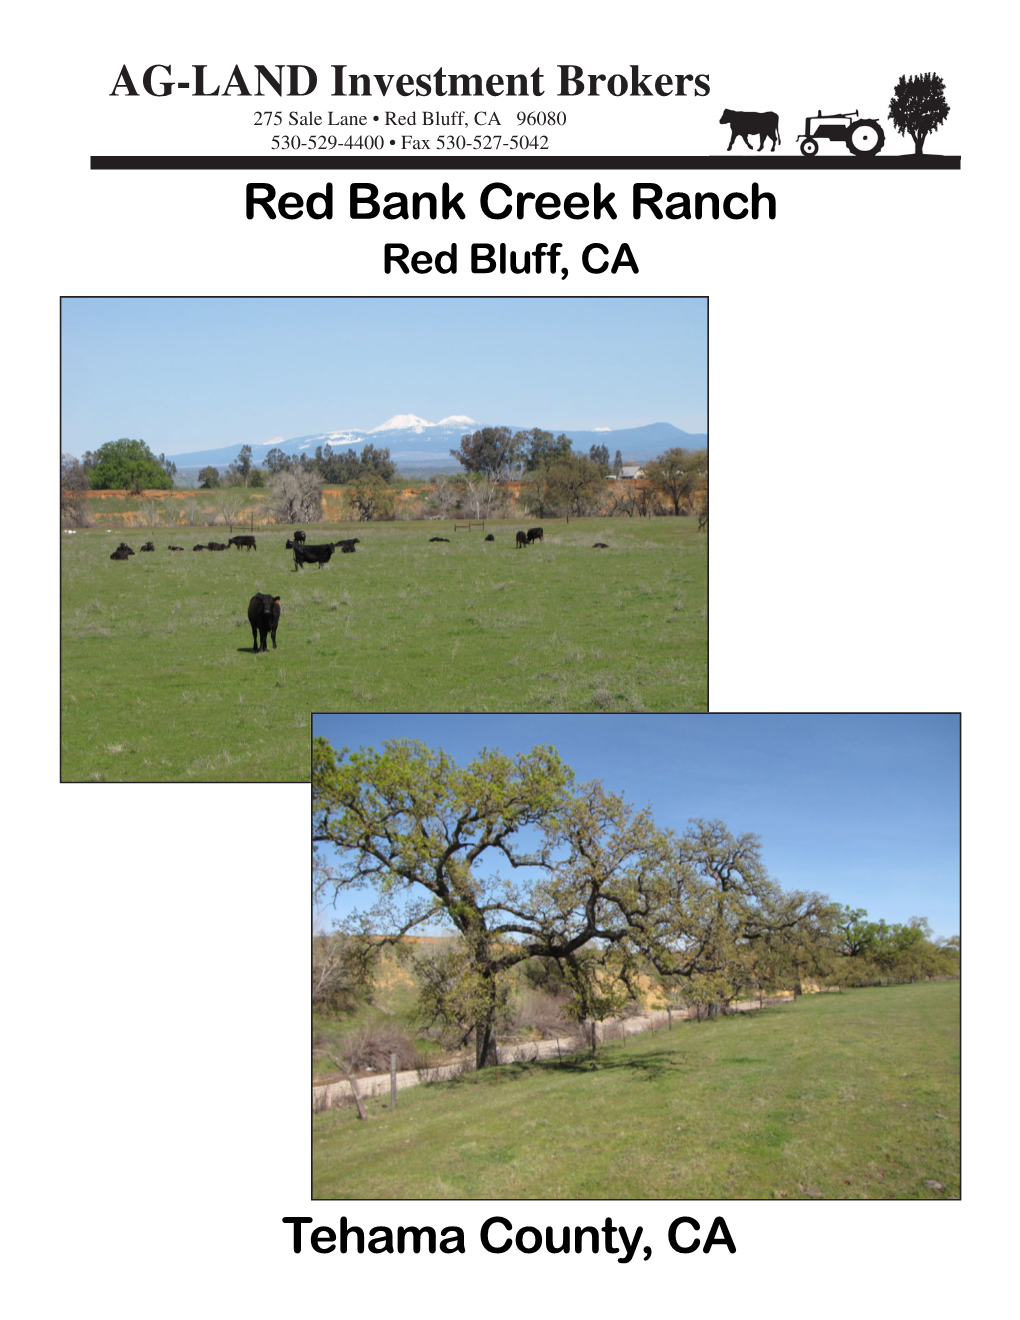 Red Bank Creek Ranch Tehama County, CA